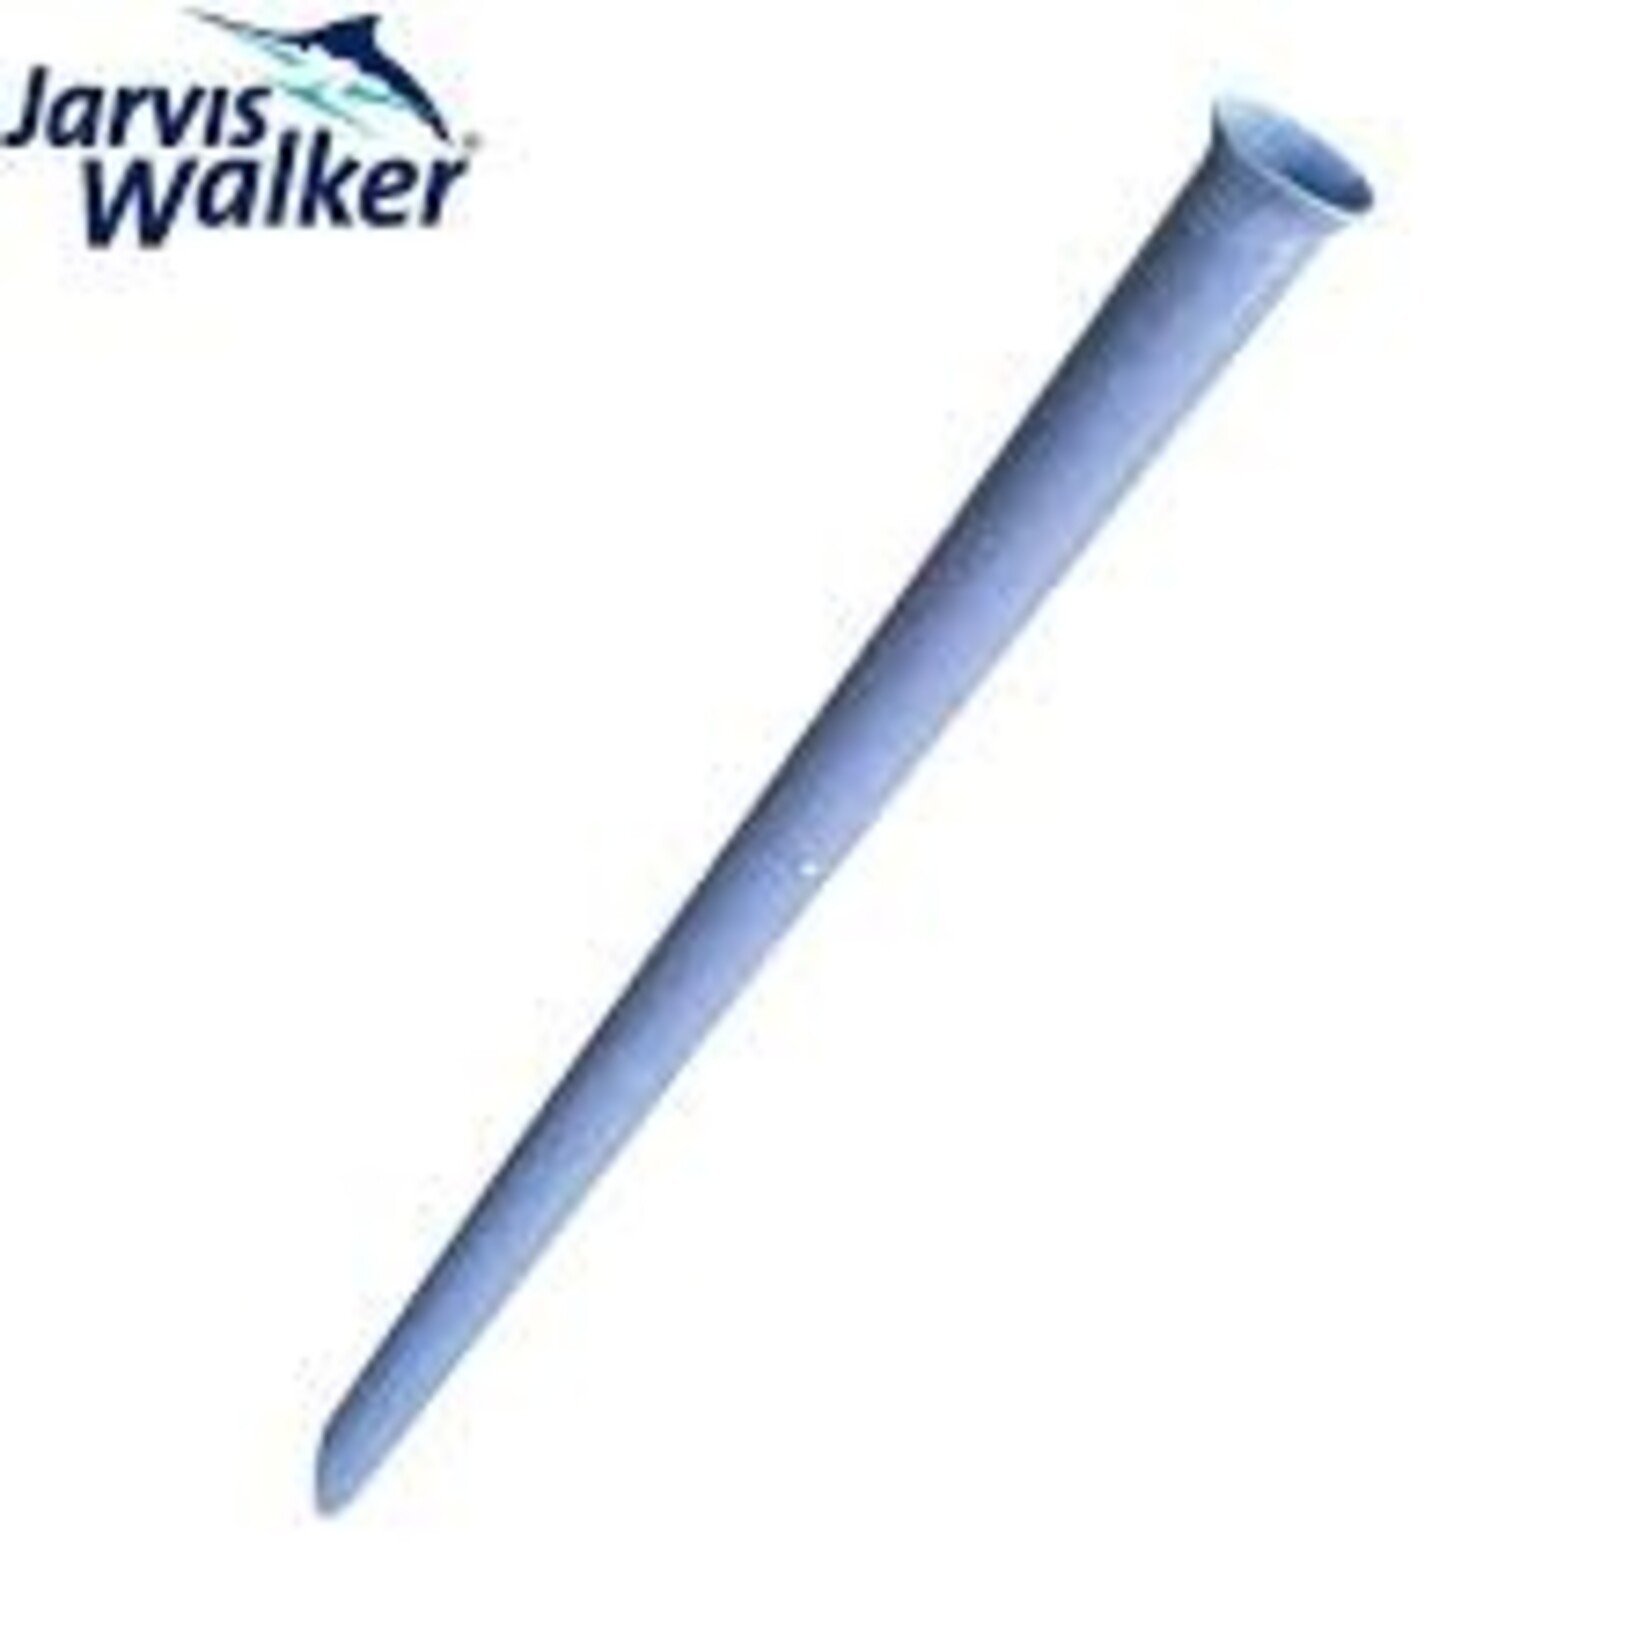 https://cdn.shoplightspeed.com/shops/657374/files/62222029/1652x1652x2/jarvis-walker-jarvis-walker-surf-rod-holder-x-long.jpg